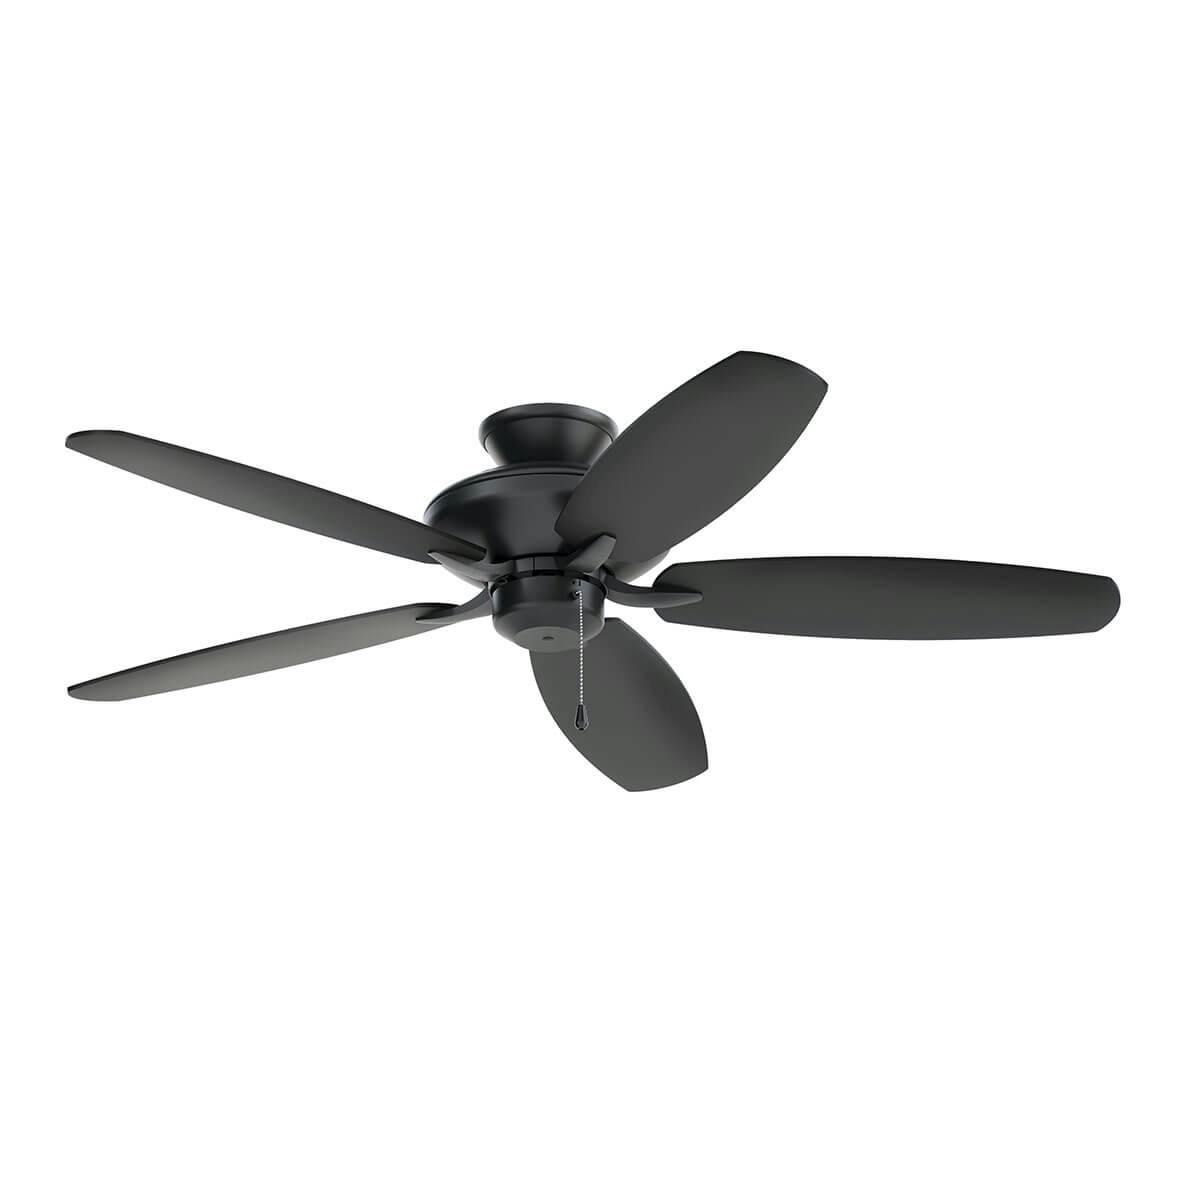 Product Image of ceiling fan 330164SBK